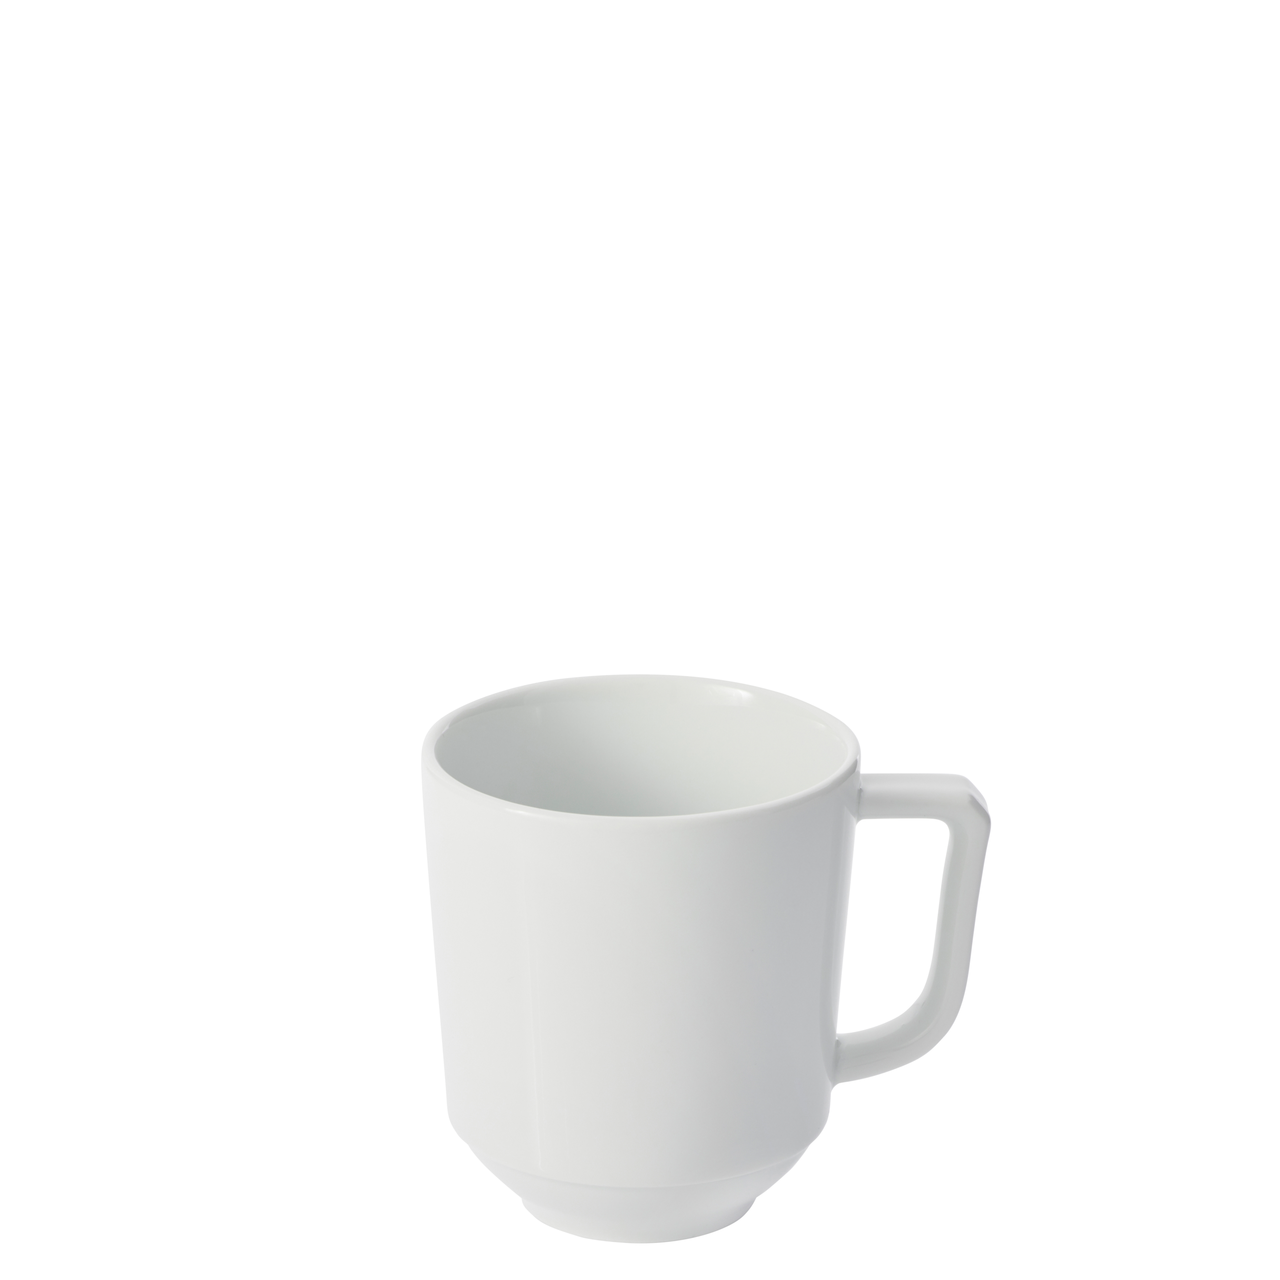 Mug 0.35l SYNERGY